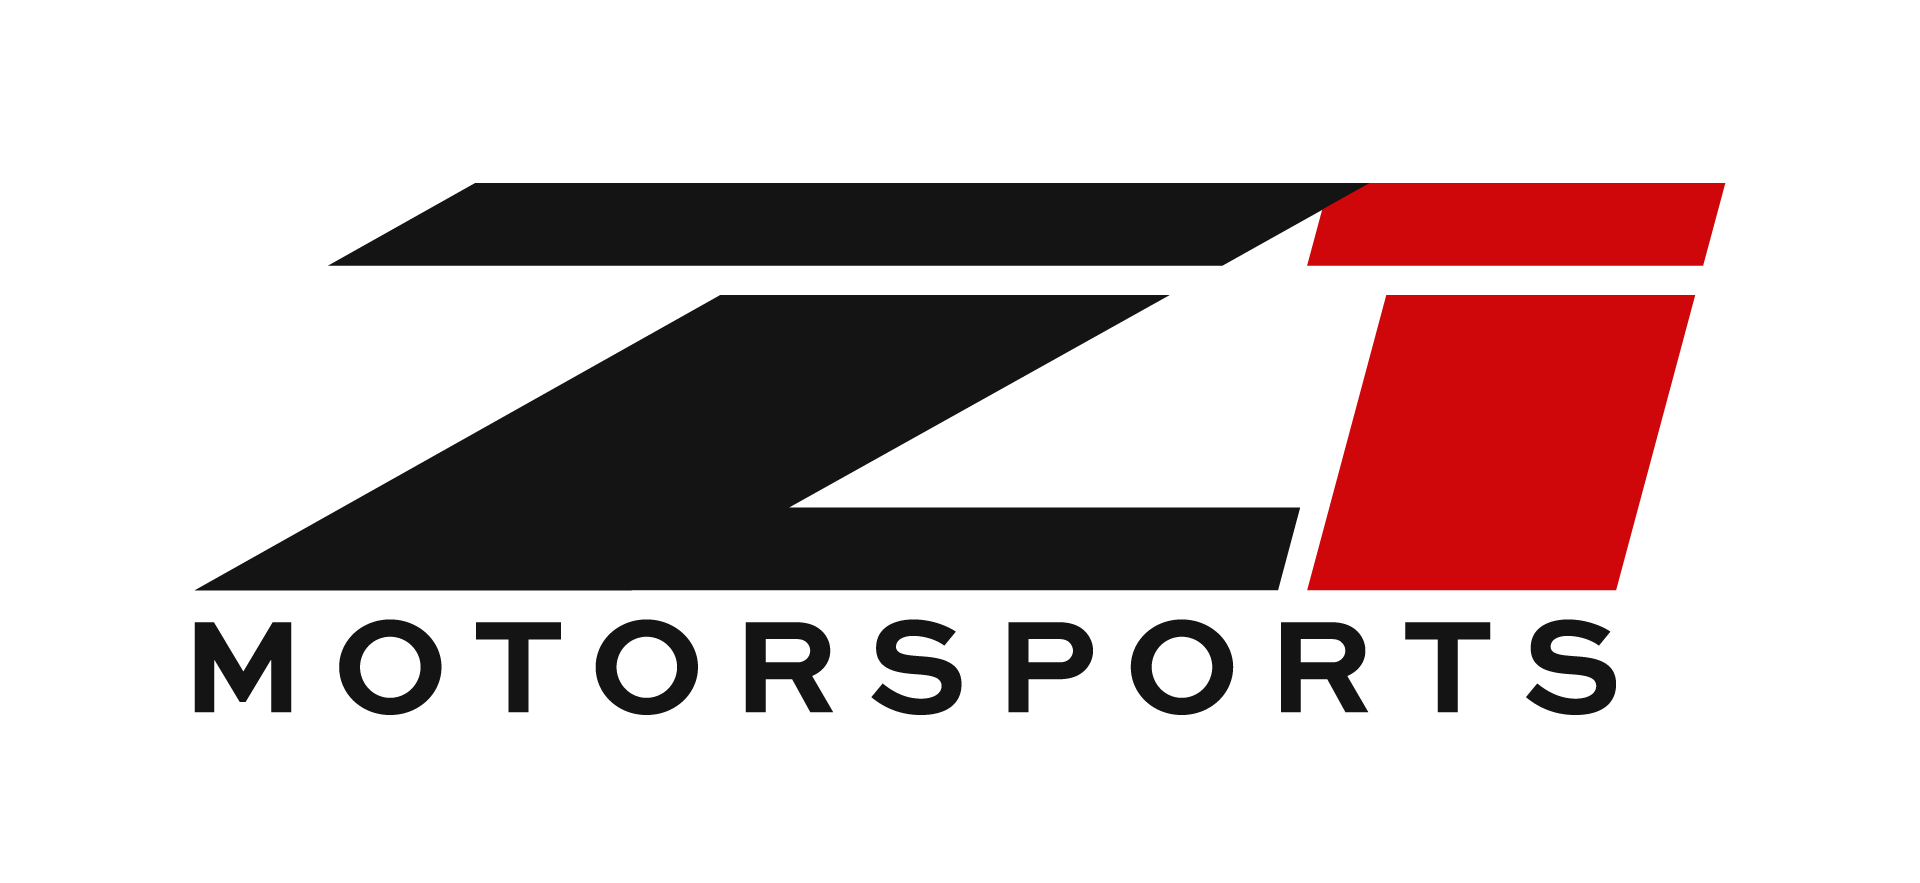 Z1 Motorsports, click here